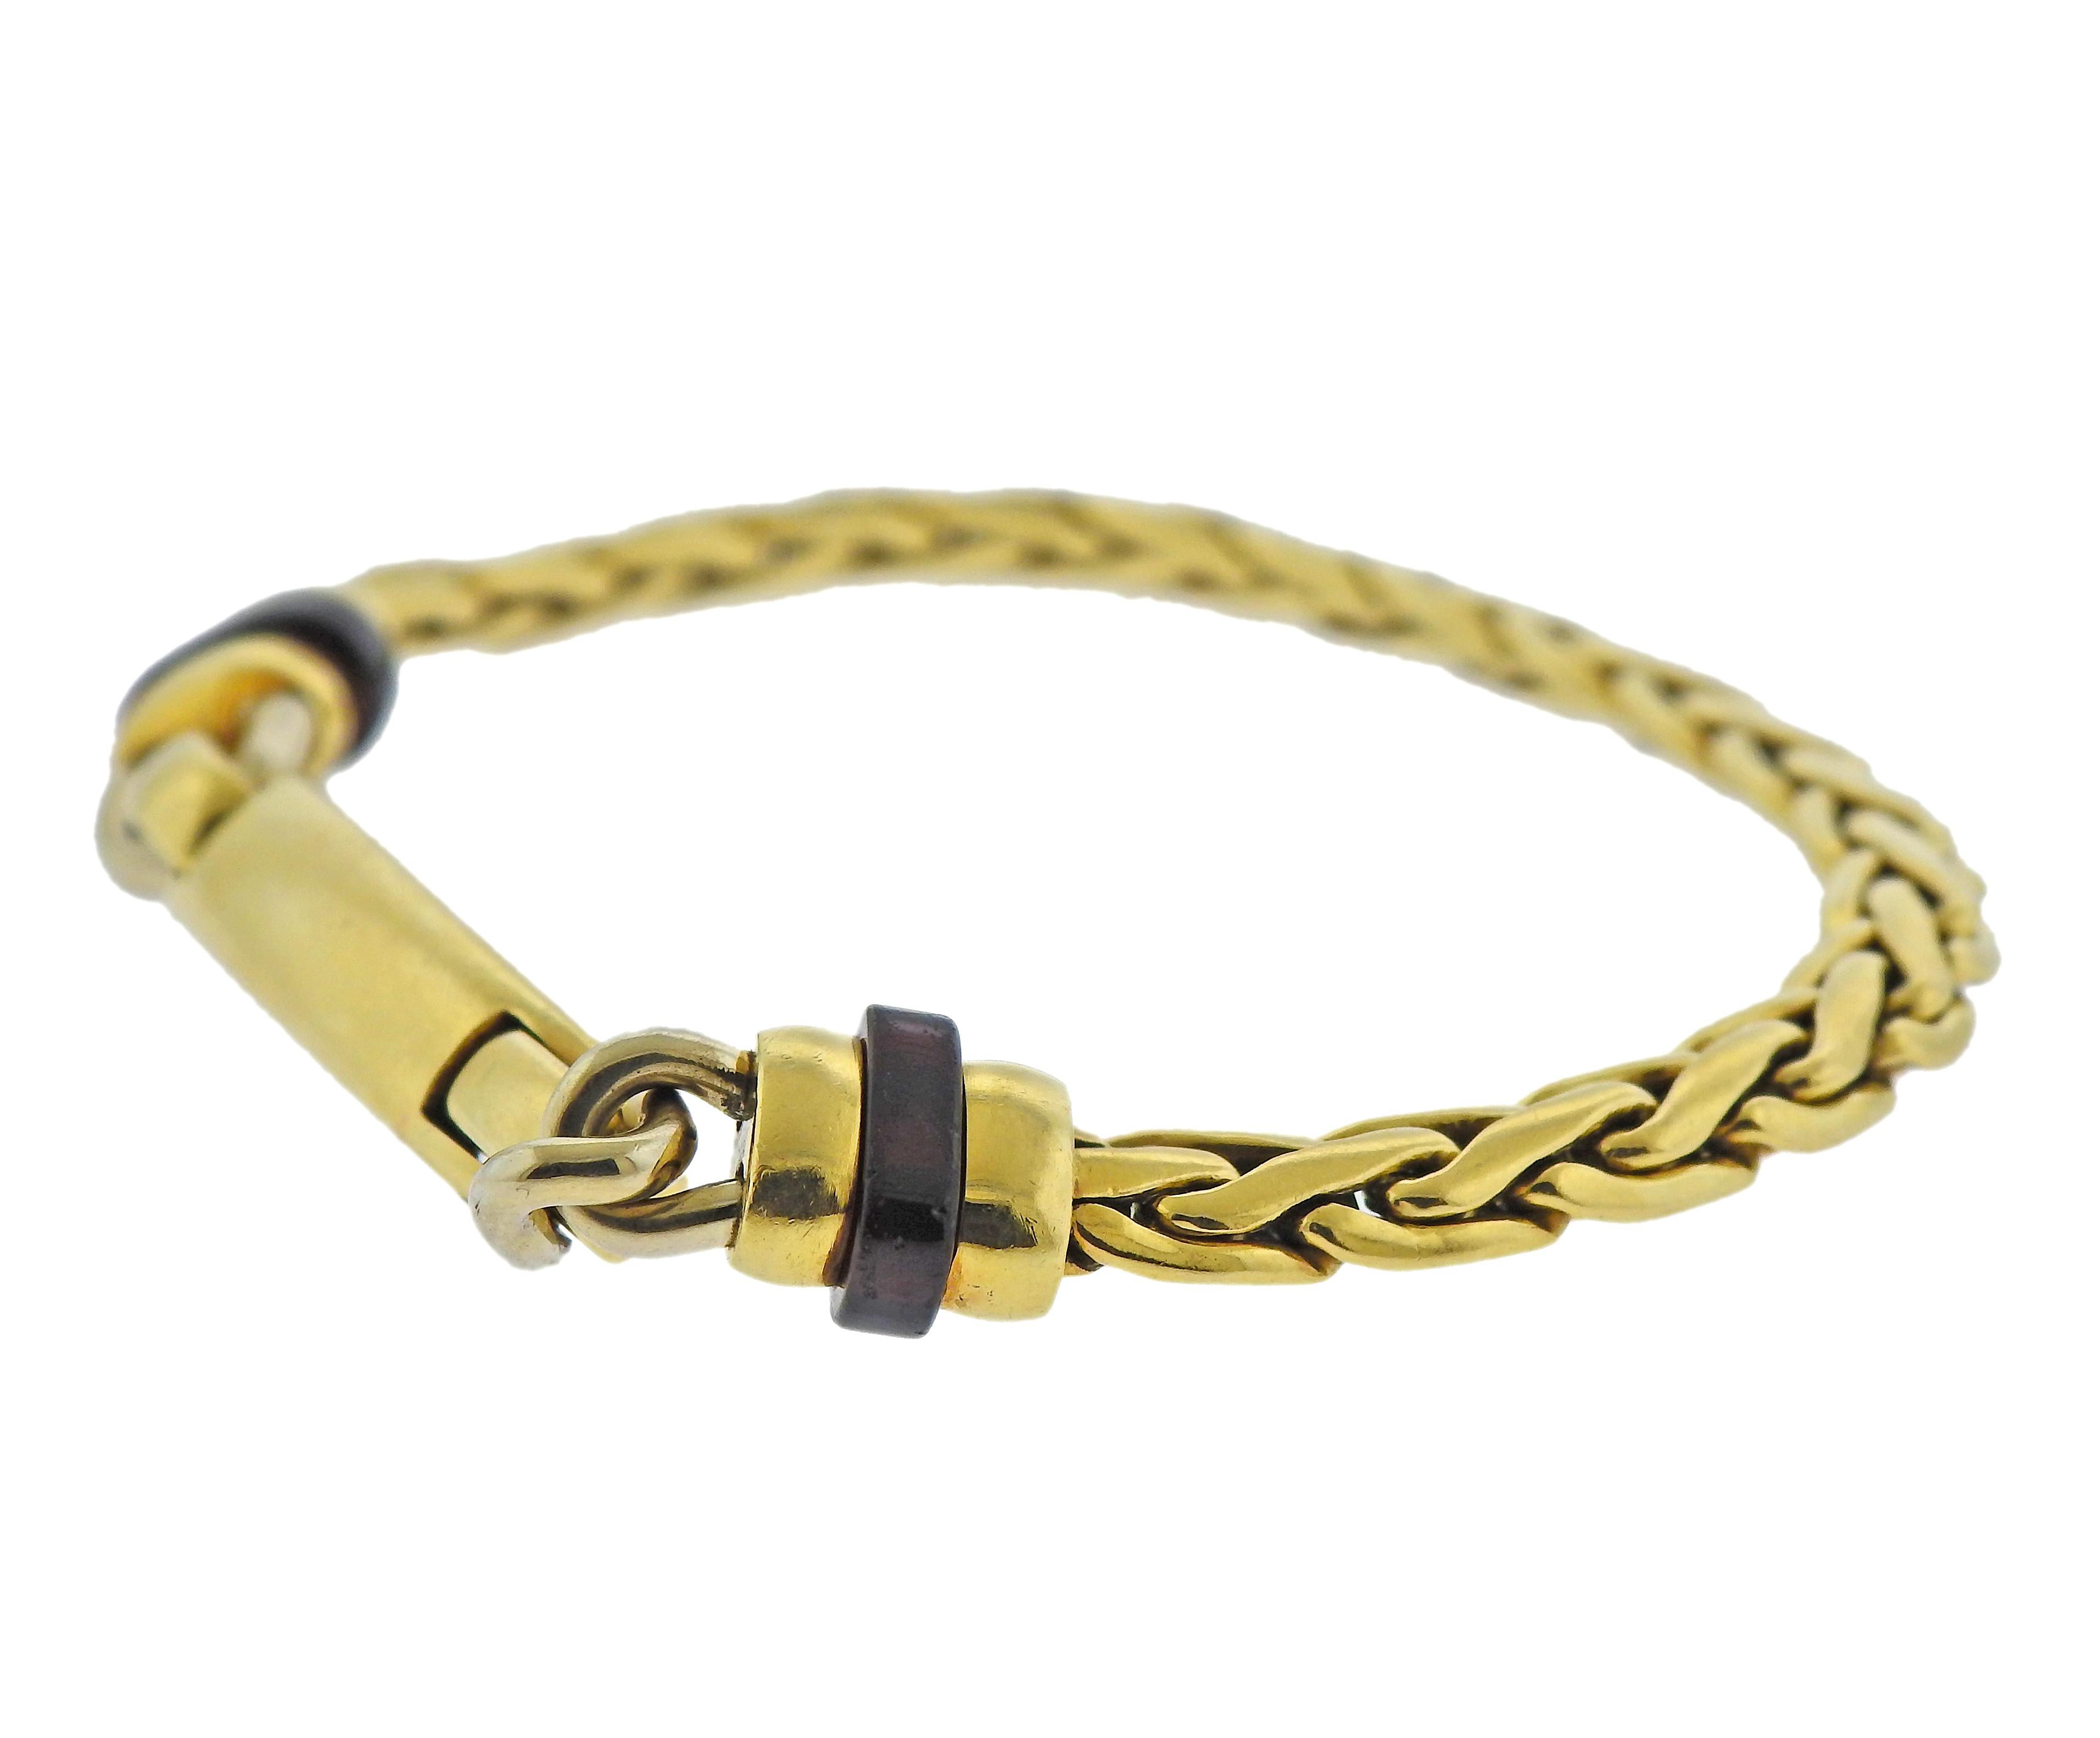 Vintage 18k gold Pomellato bracelet with garnets. Bracelet is 7